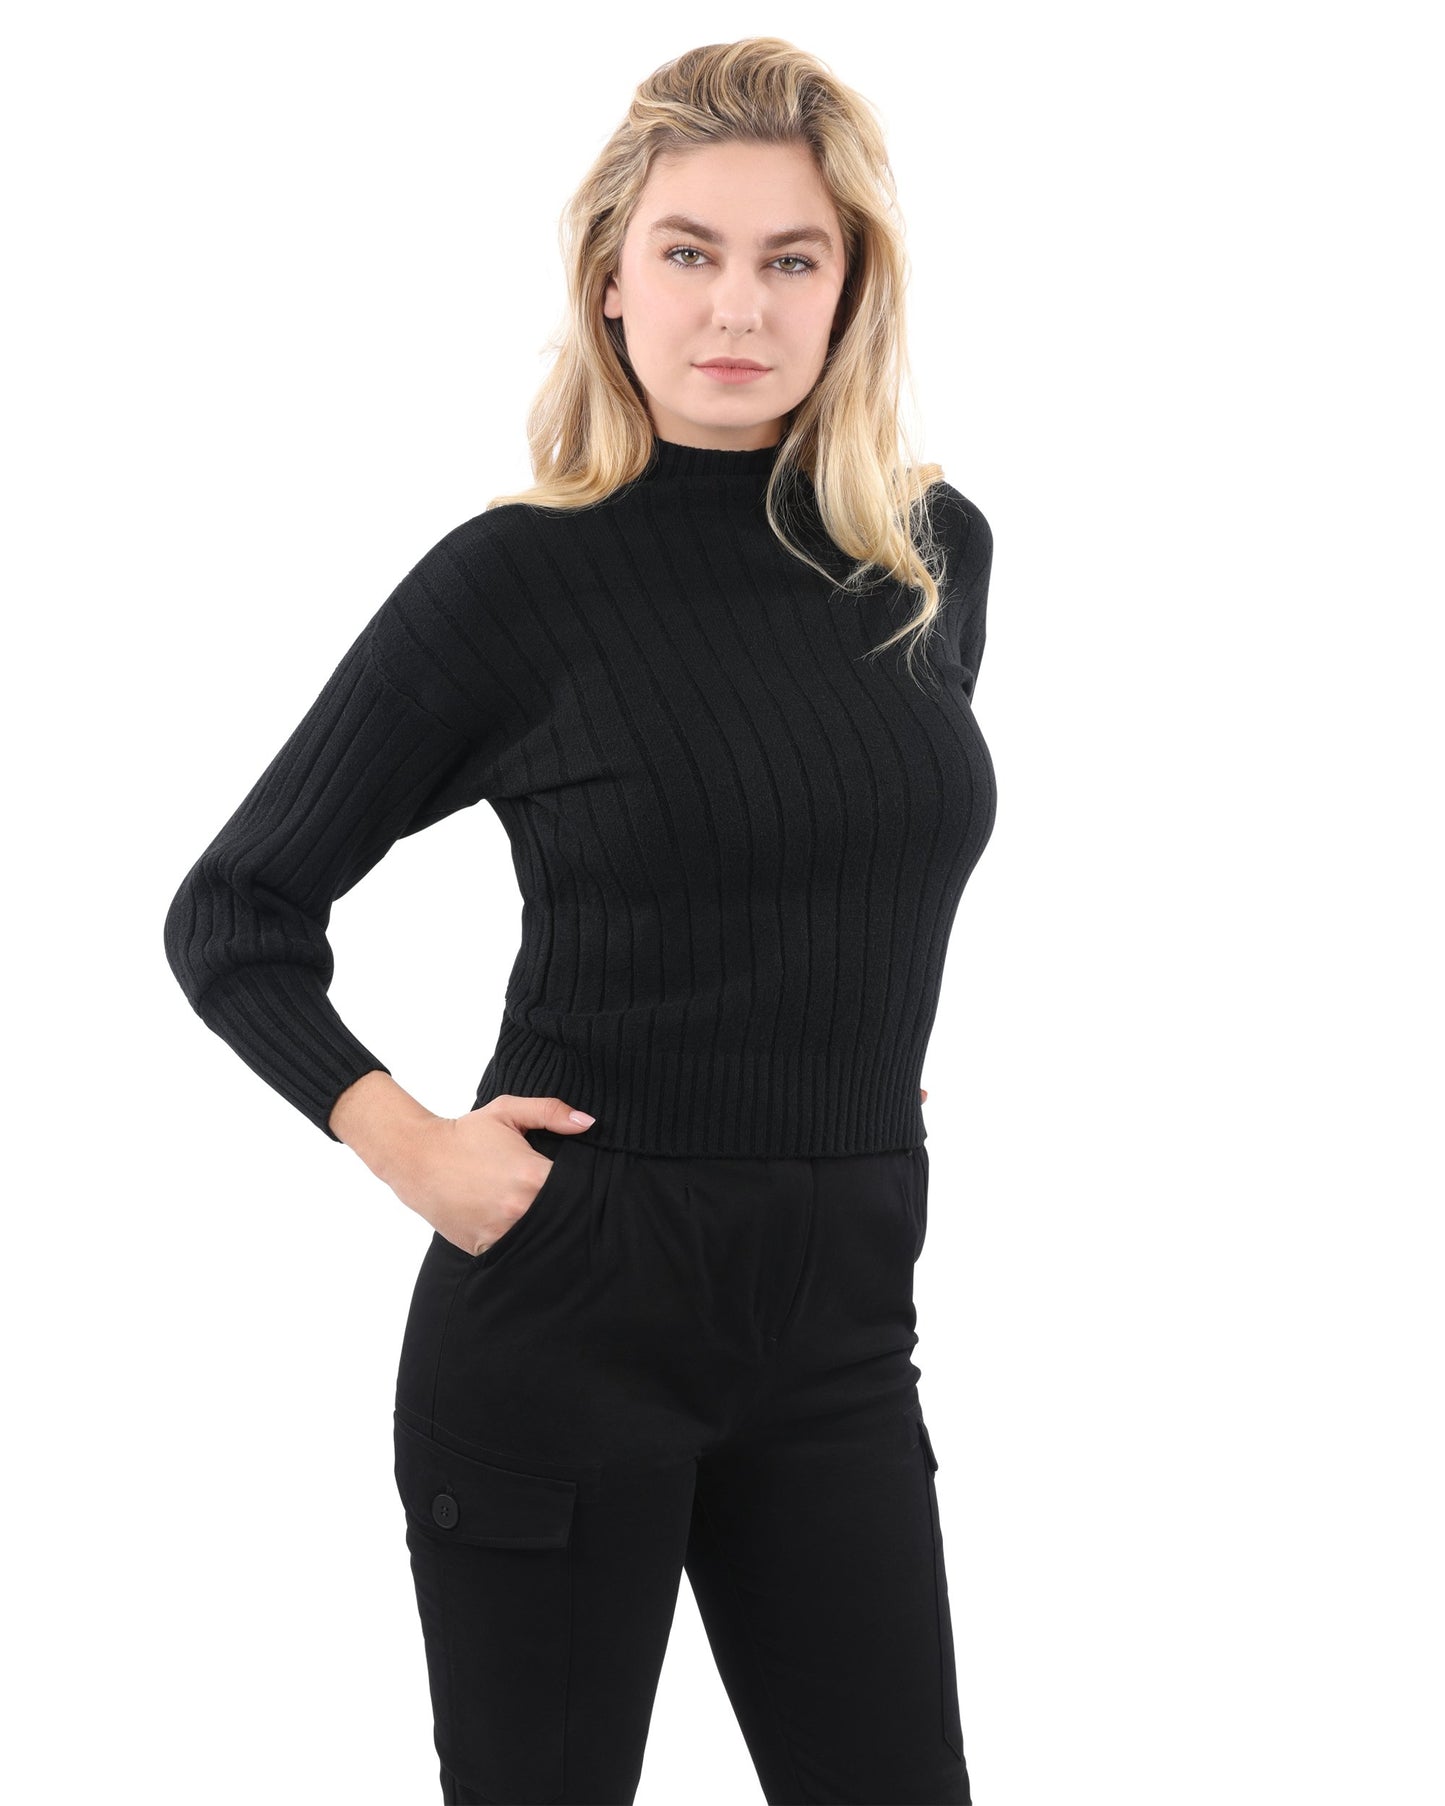 Pickfair Ribbed Sweater Top Women's Clothing LoveAdora